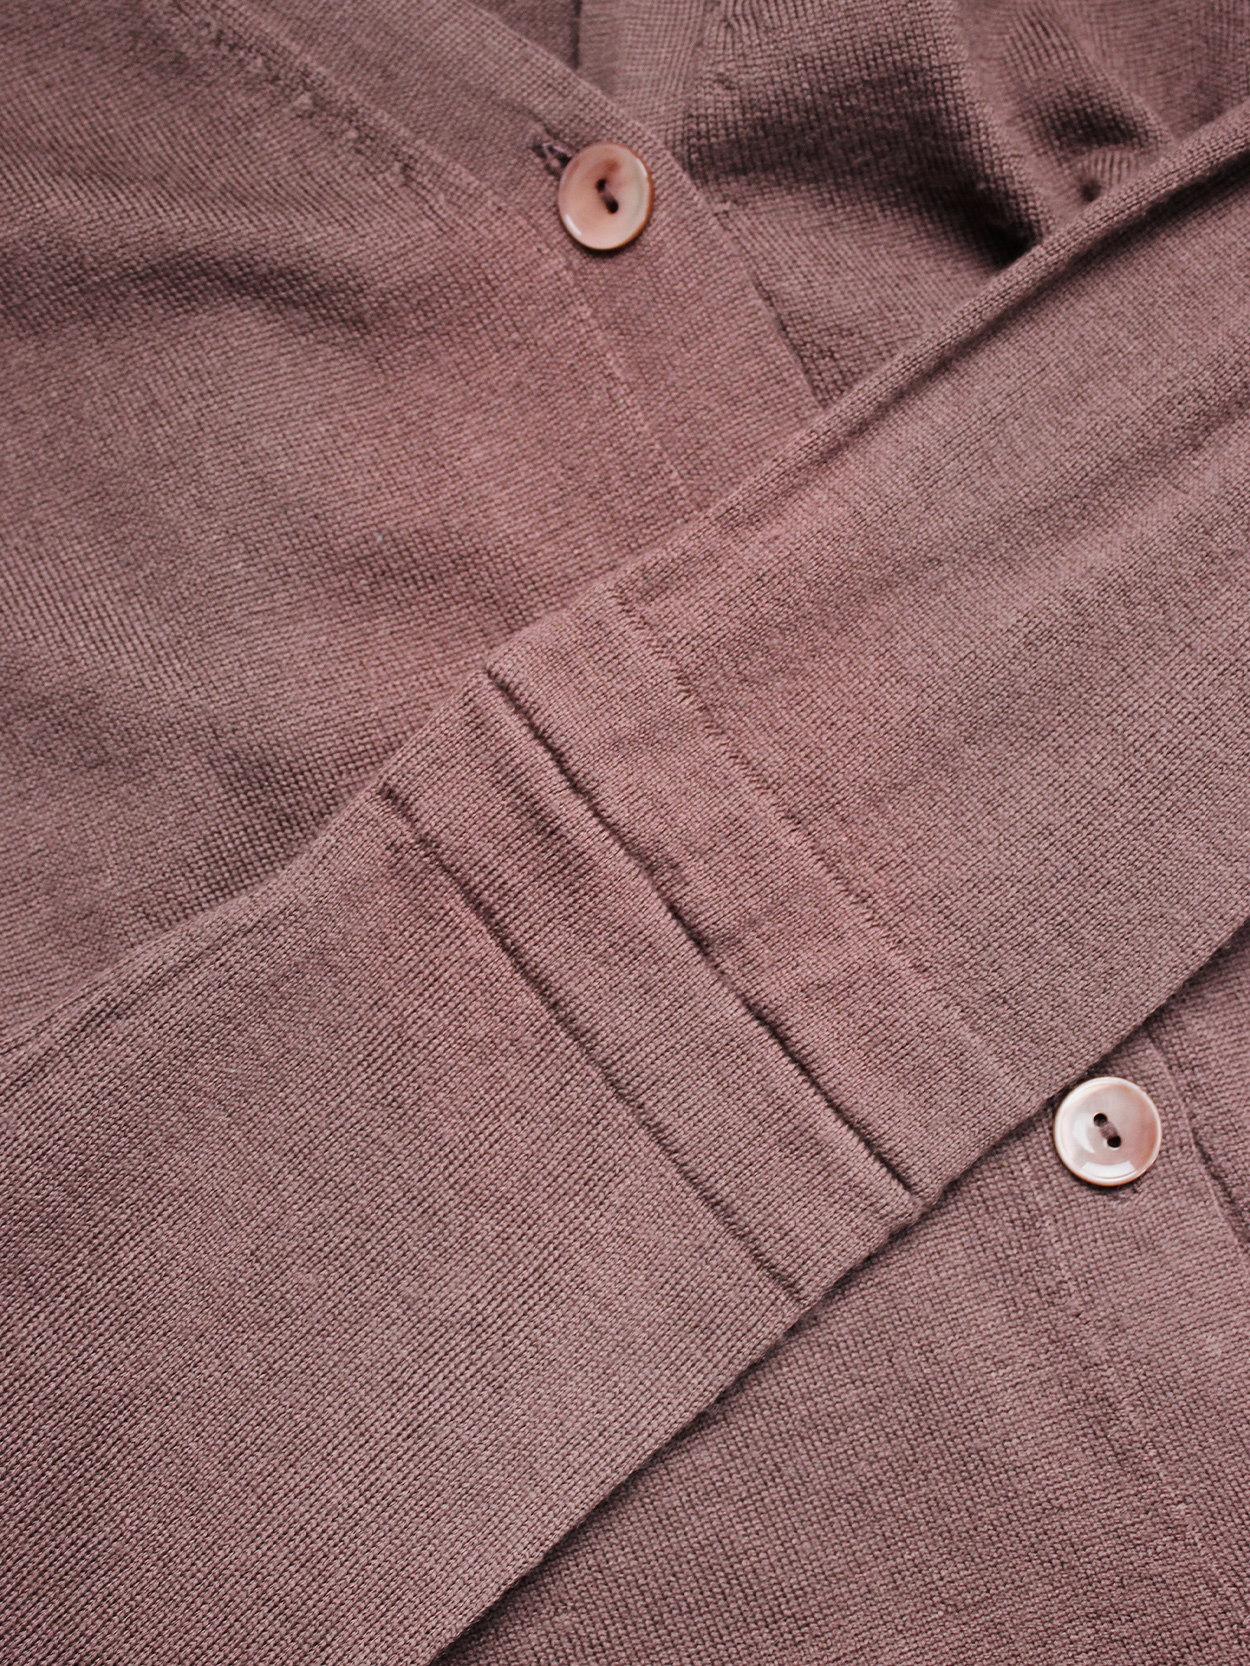 vintage Maison Martin Margiela orange jumper with sewn-together sleeves fall 2005 (4)